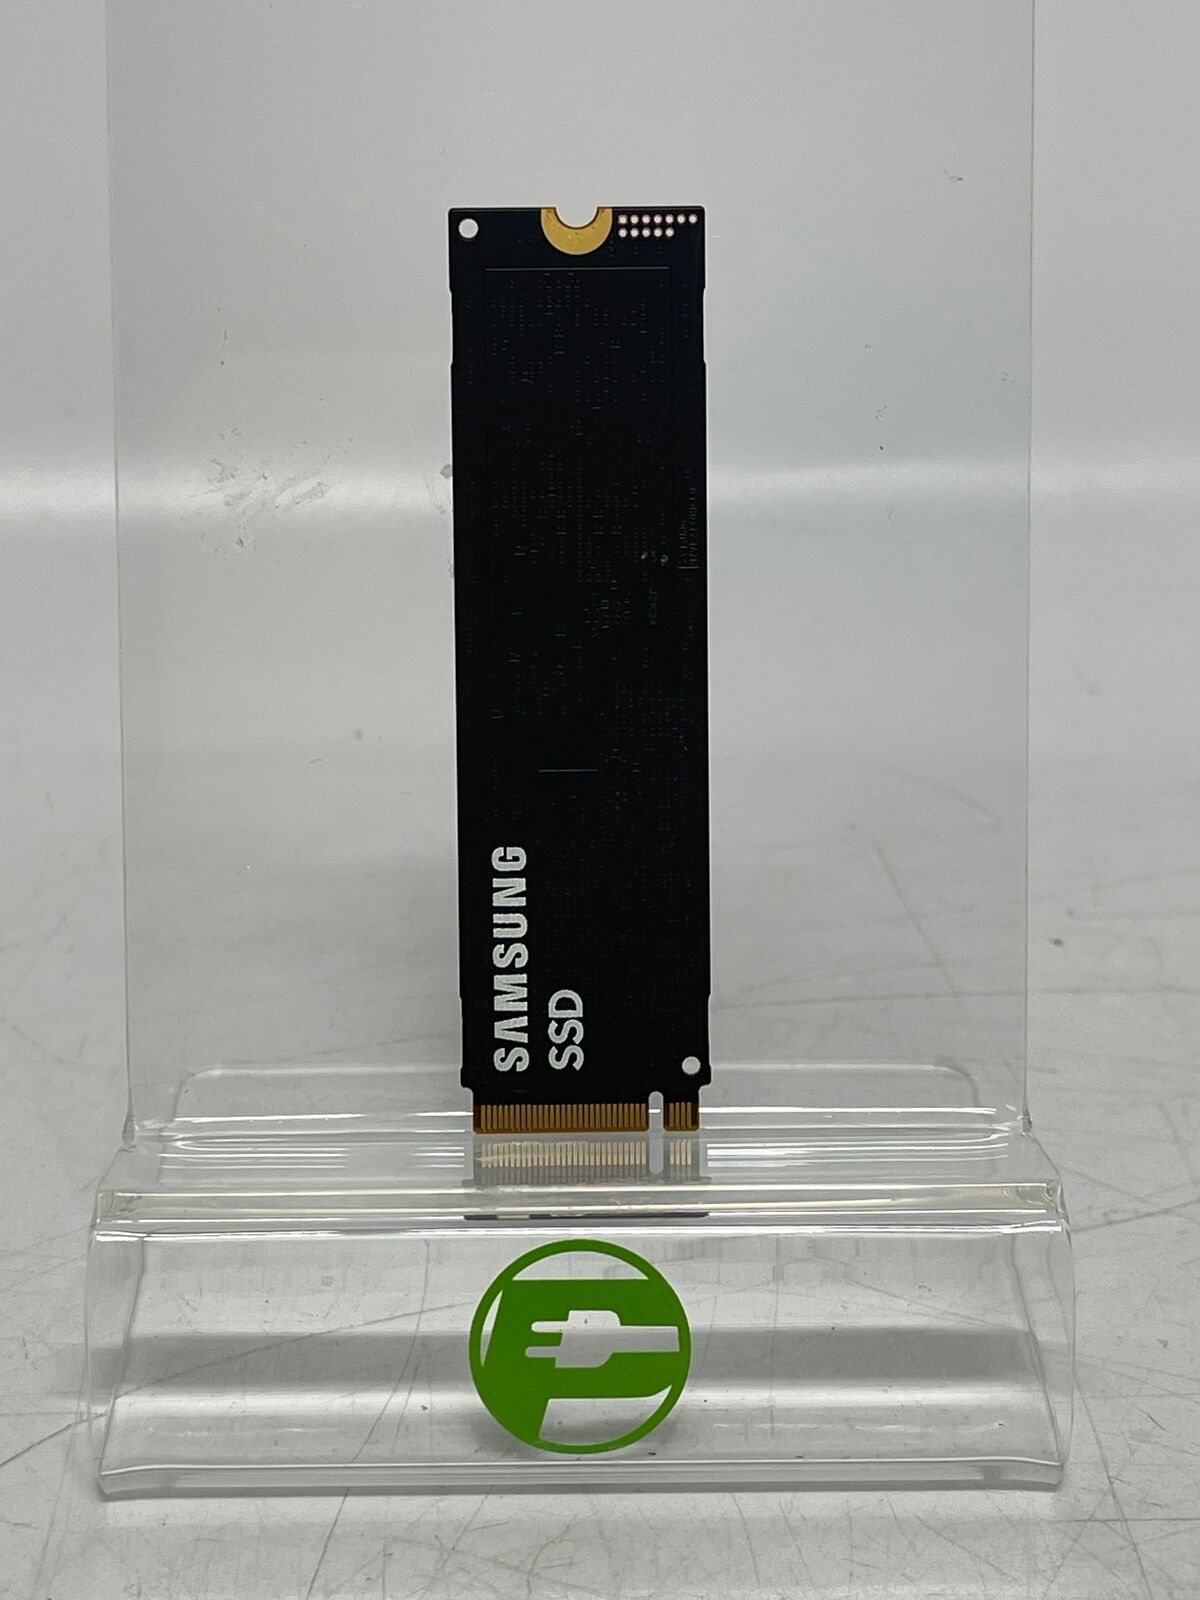 Samsung M.2 2280 SSD 512GB PCIe Gen4 x4 SSD MZ-VL25120 Solid State Drive